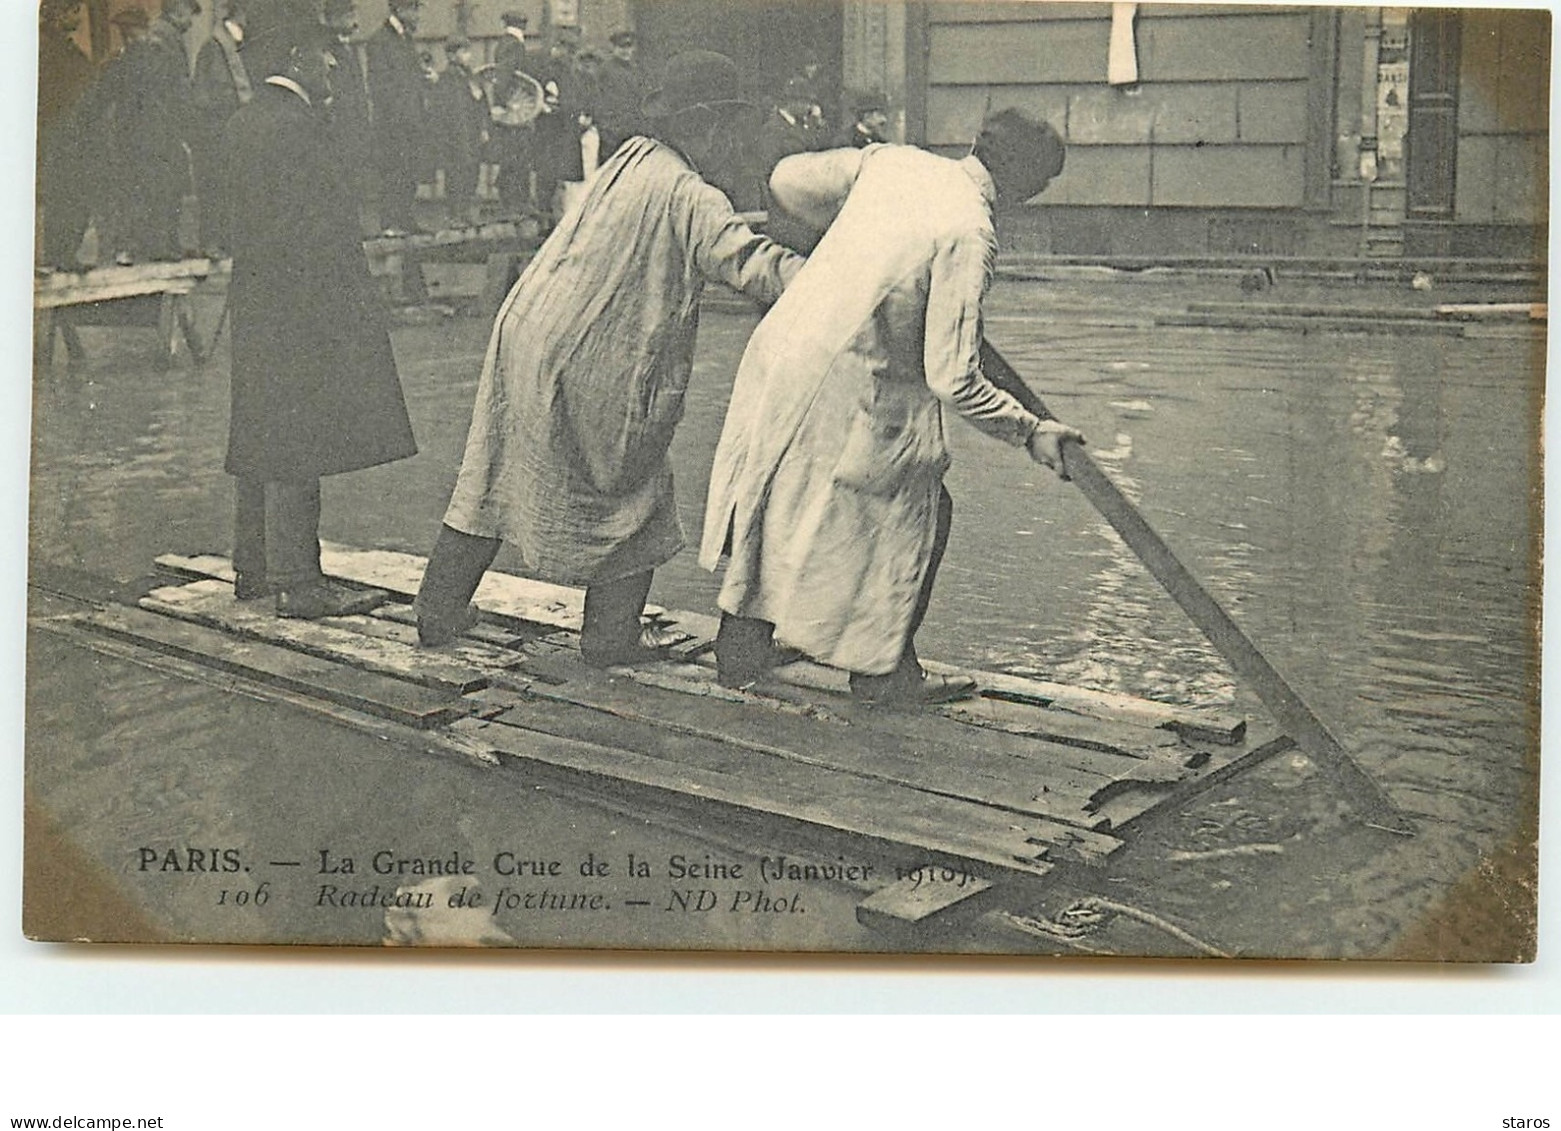 La Grande Crue De La Seine - PARIS - Radeau De Fortune - De Overstroming Van 1910